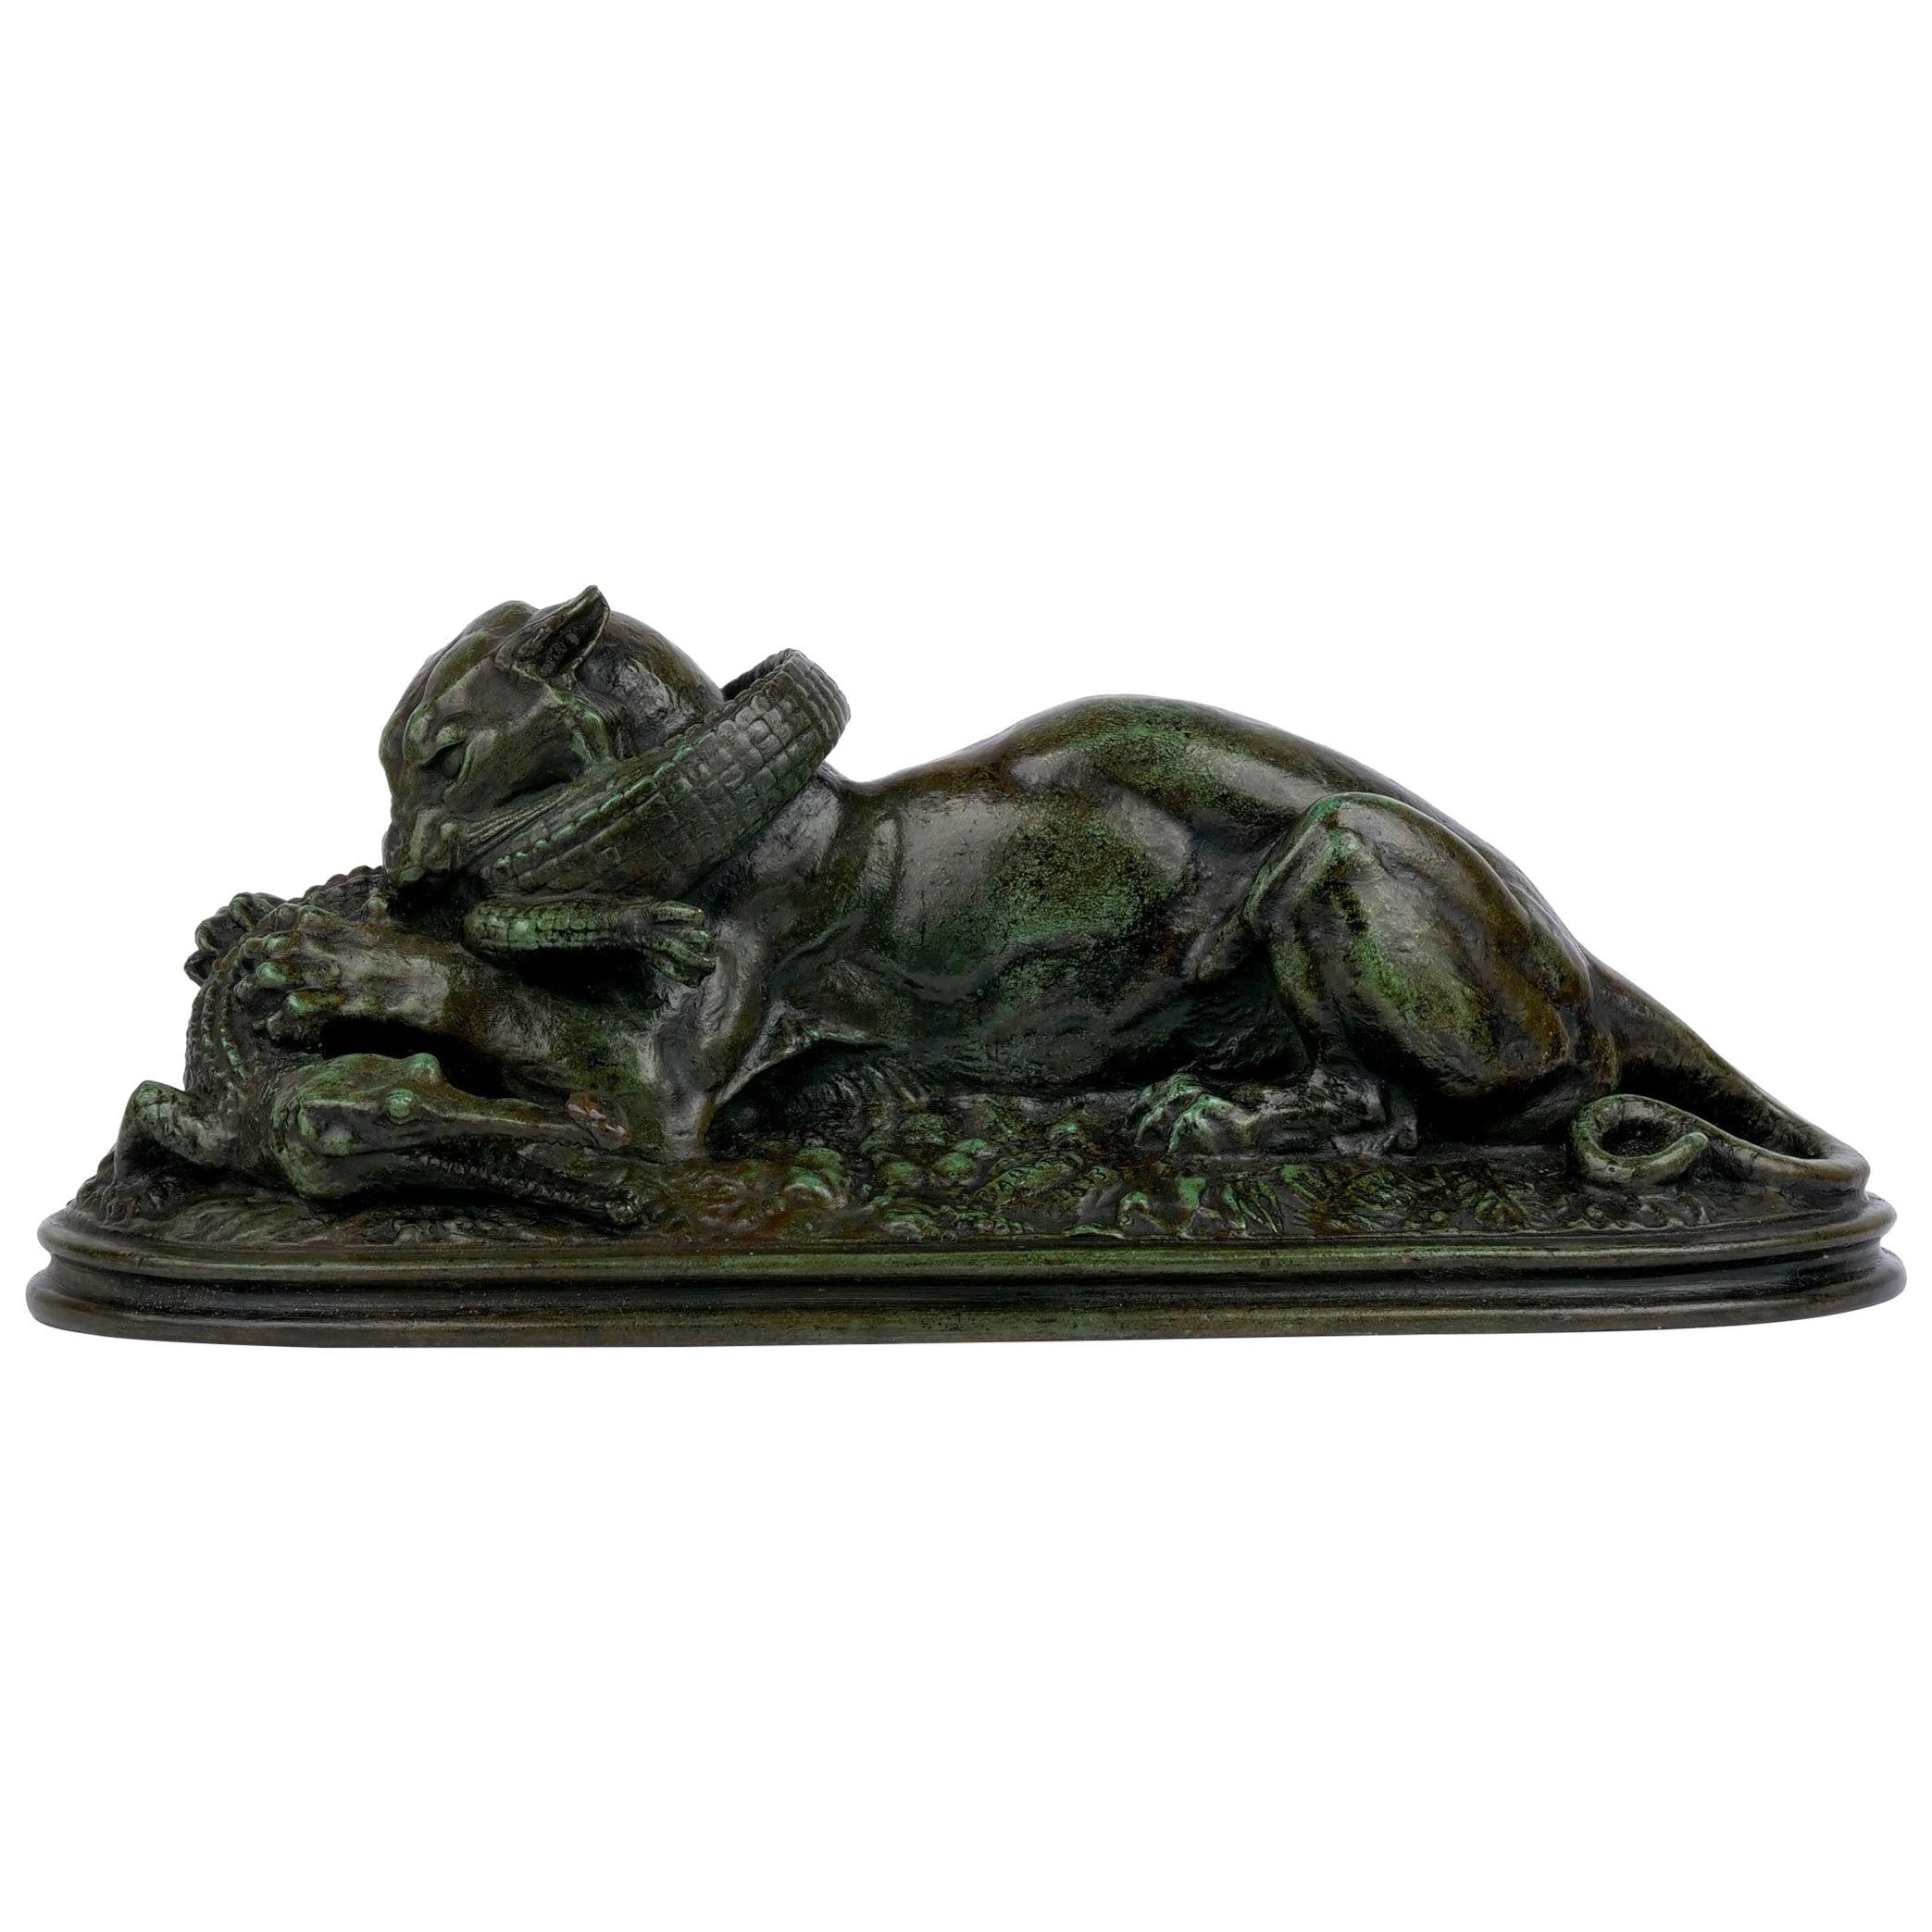 Bronze Sculpture “Tiger Devouring a Gavial” after Antoine-Louis Barye